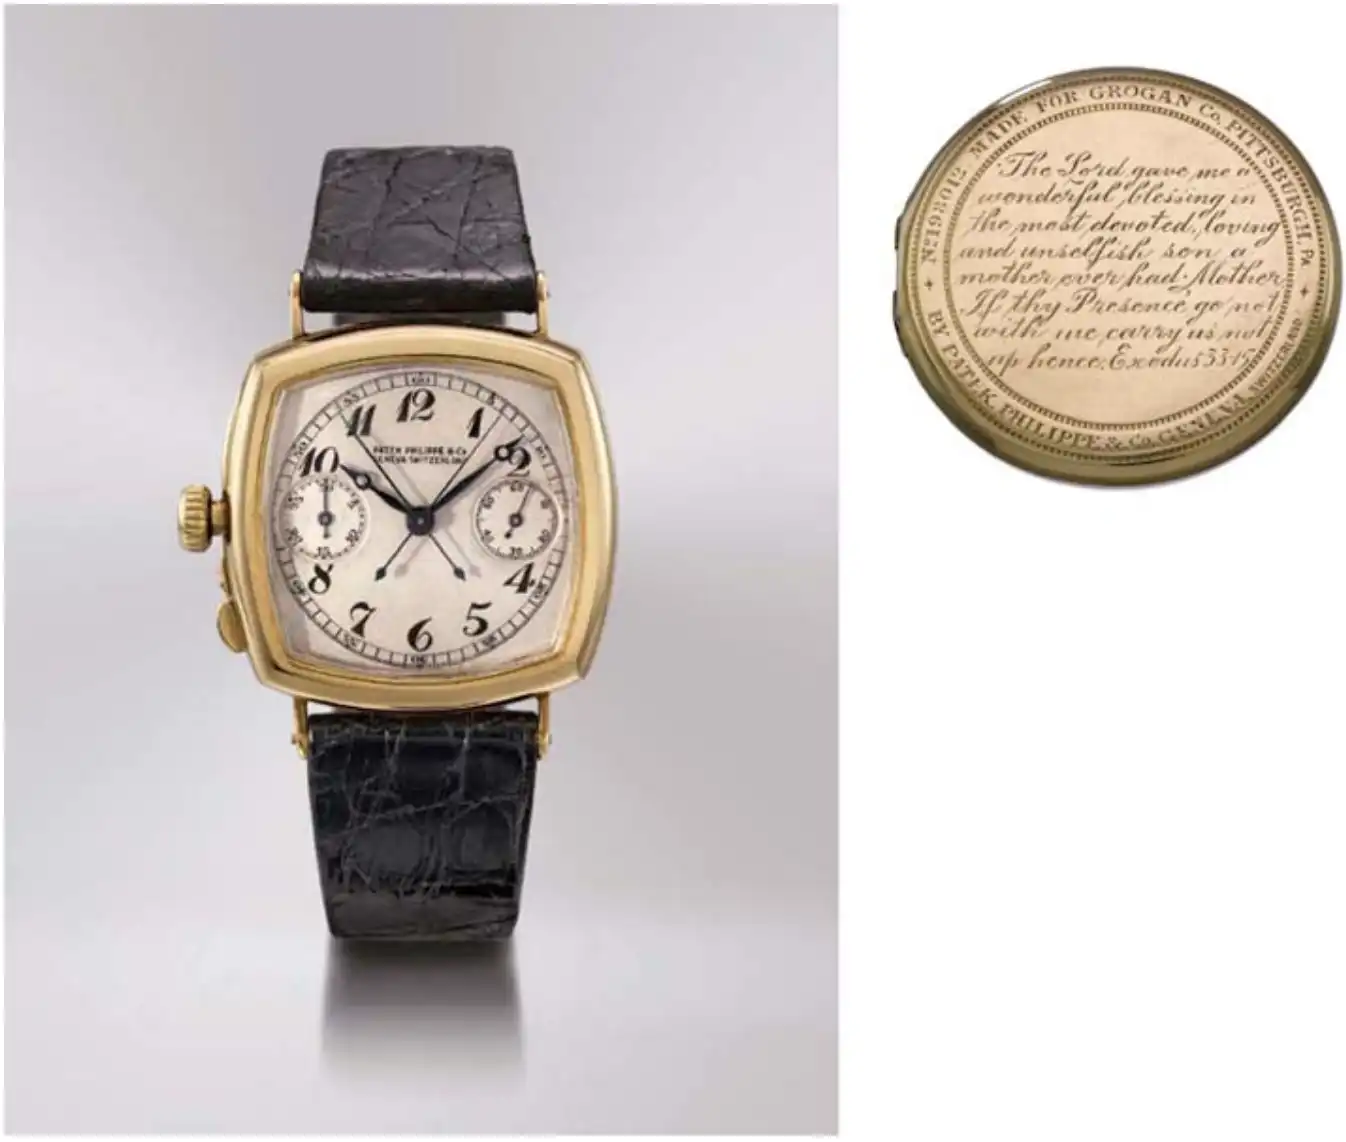 Emperor Watch & Jewellery and Patek Philippe